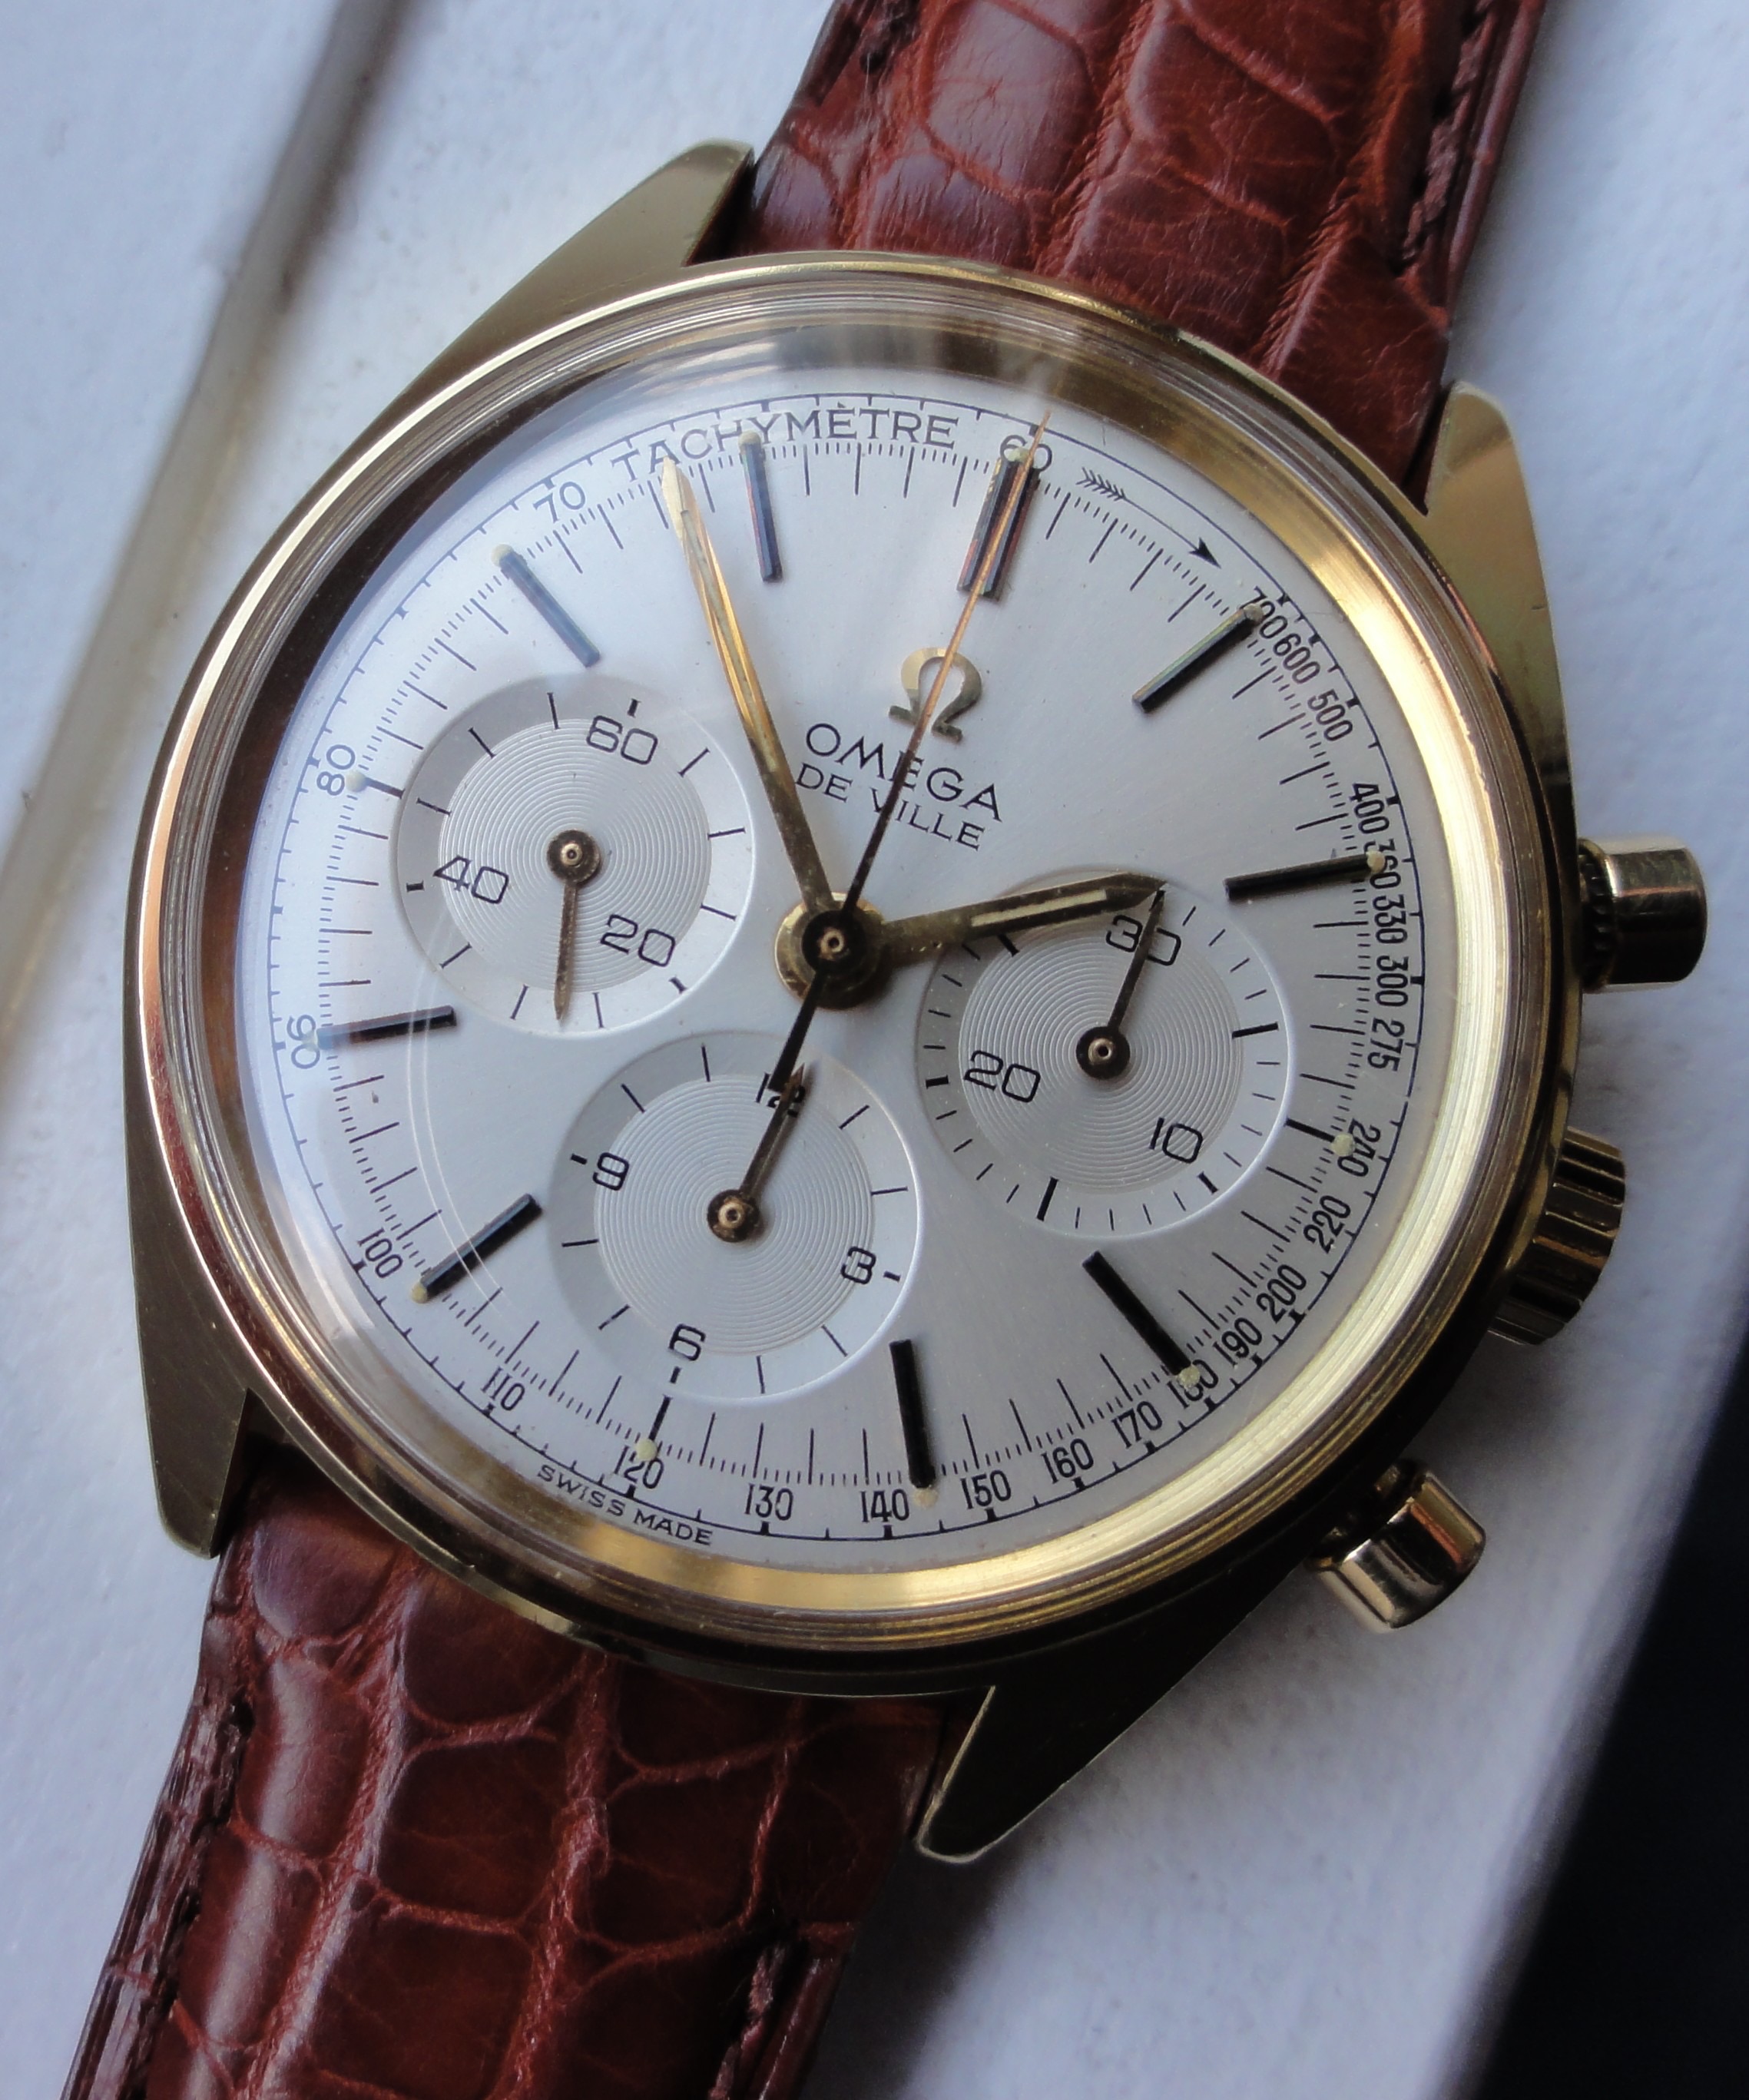 omega seamaster deville chronograph